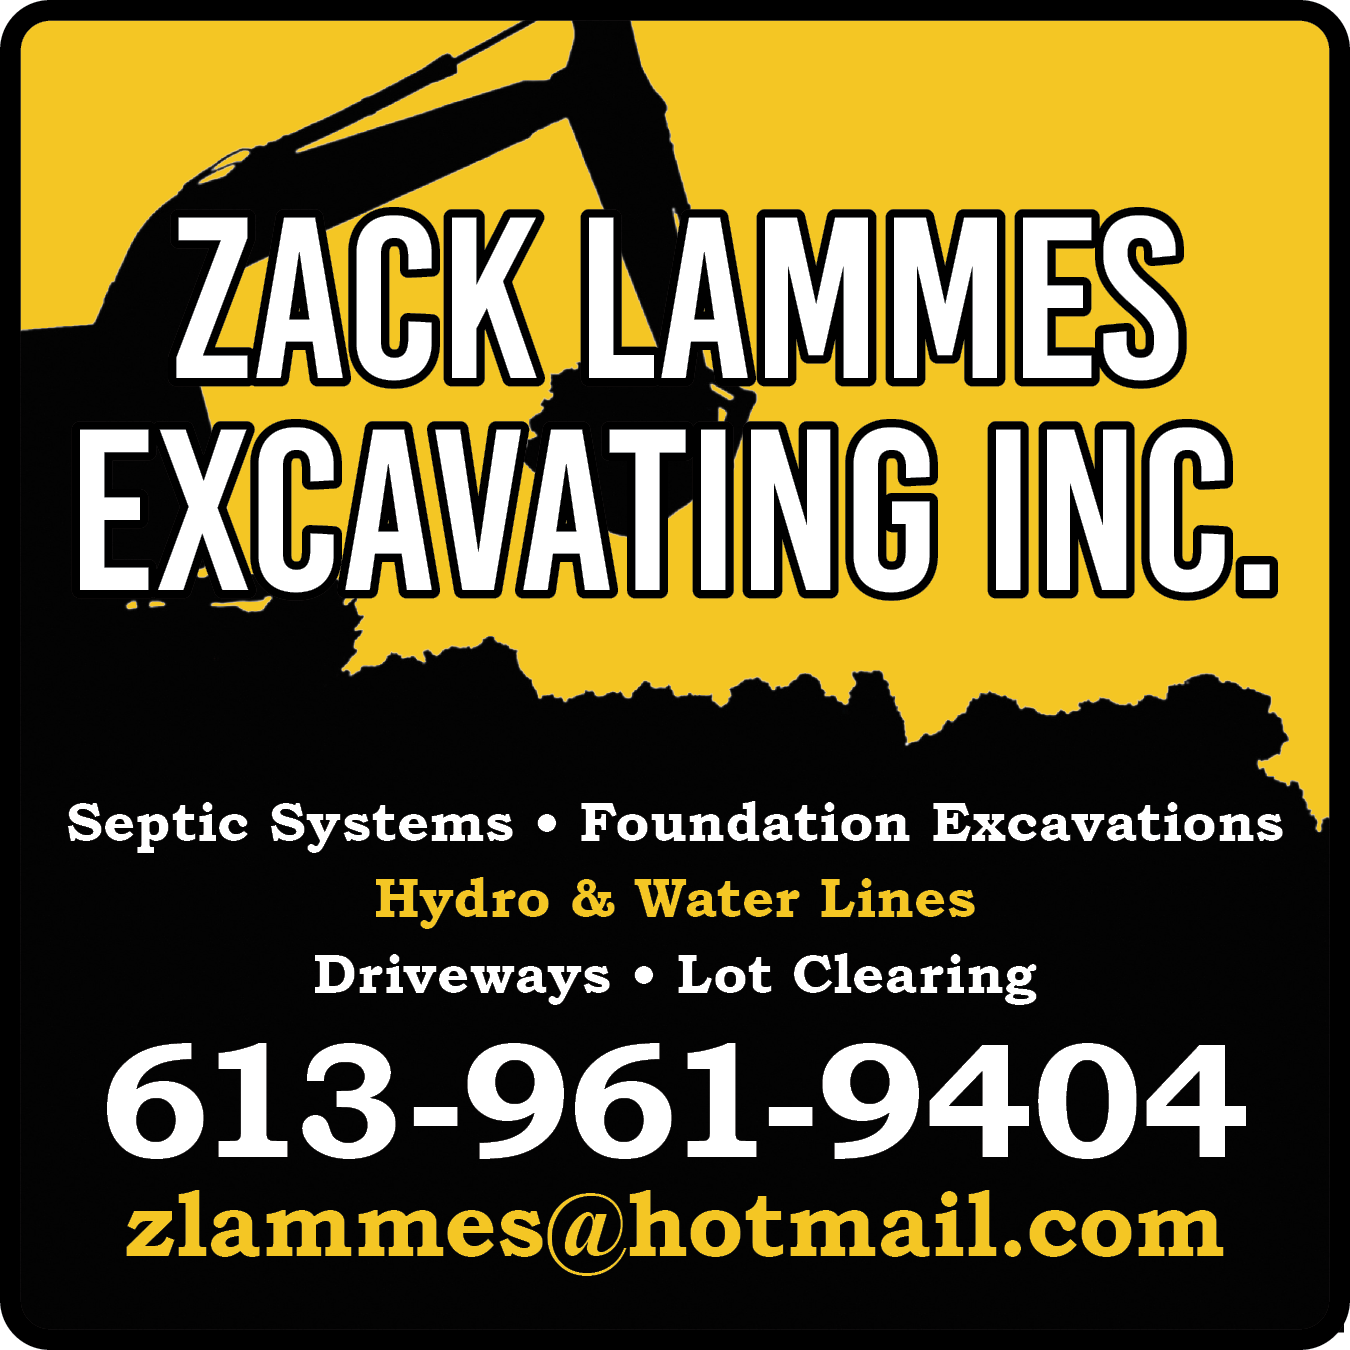 Zack Lammes Excavating Inc.